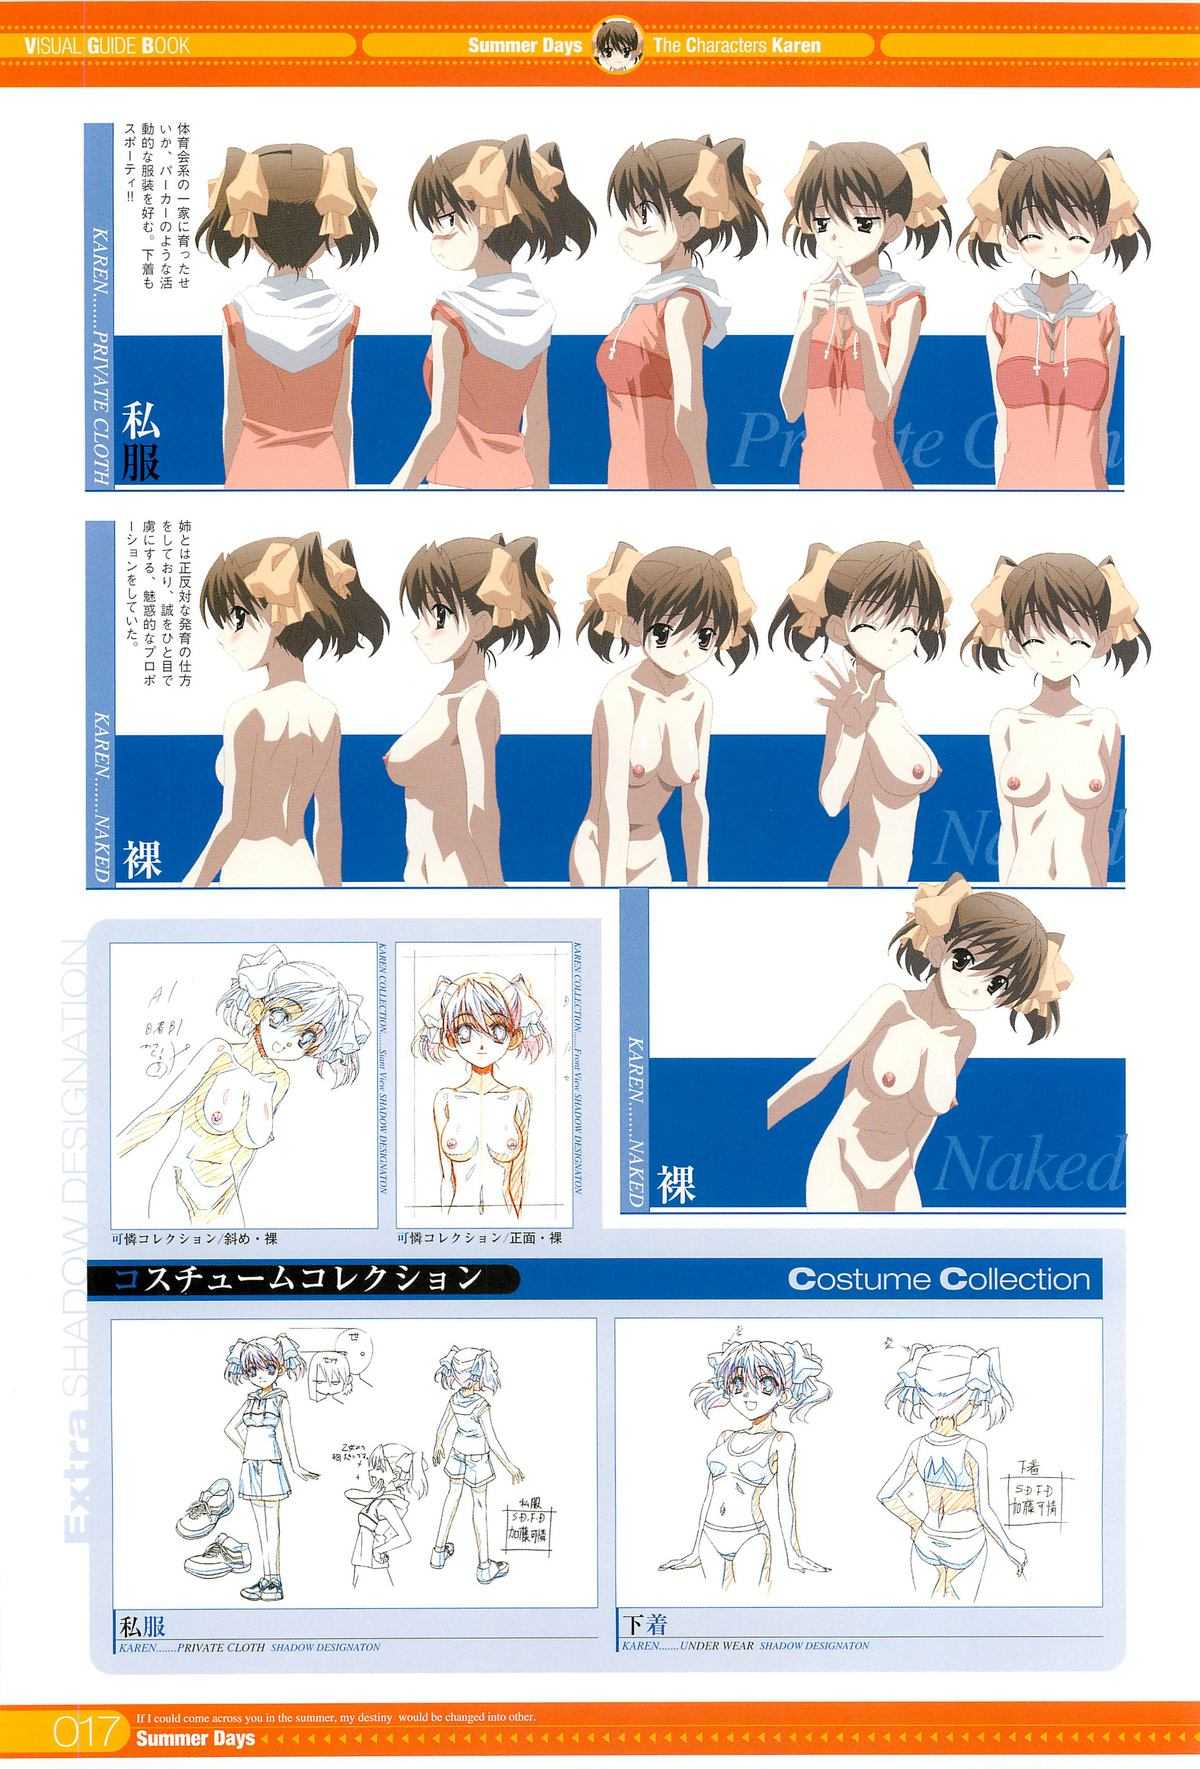 SummerDays Visual Guide Book SummerDays ビジュアル・ガイドブック